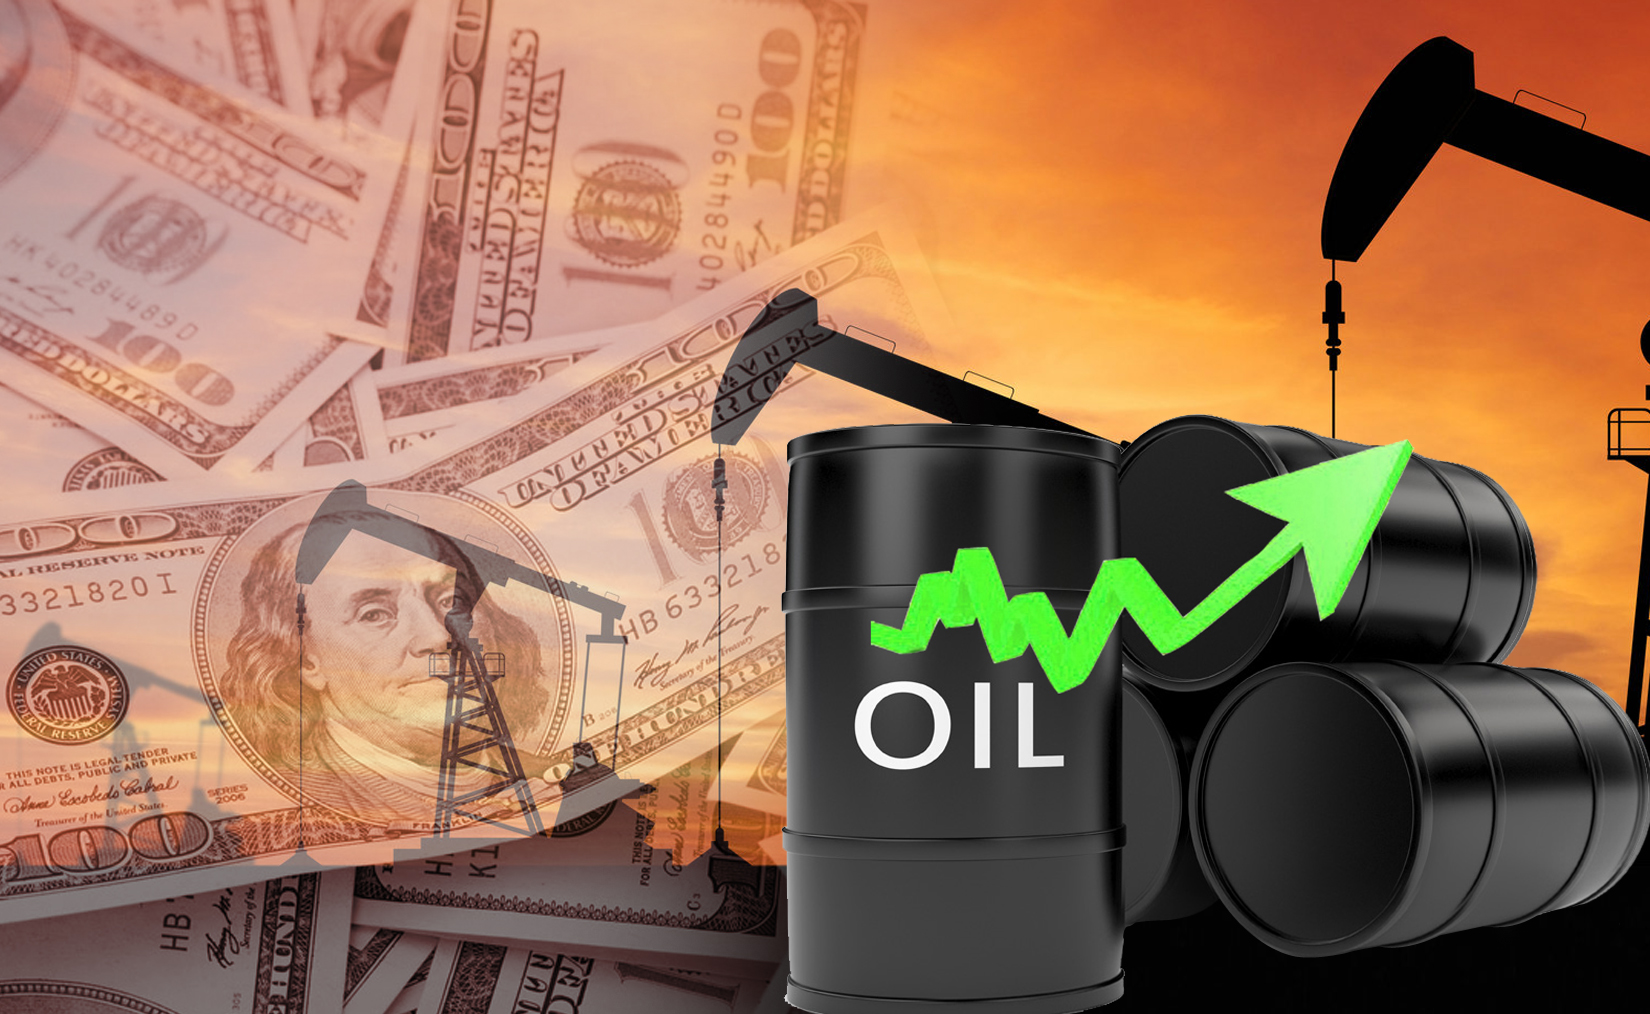 Kuwait crude oil up 86 cents to USD 102.51 pb - KPC                                                                                                                                                                                                       